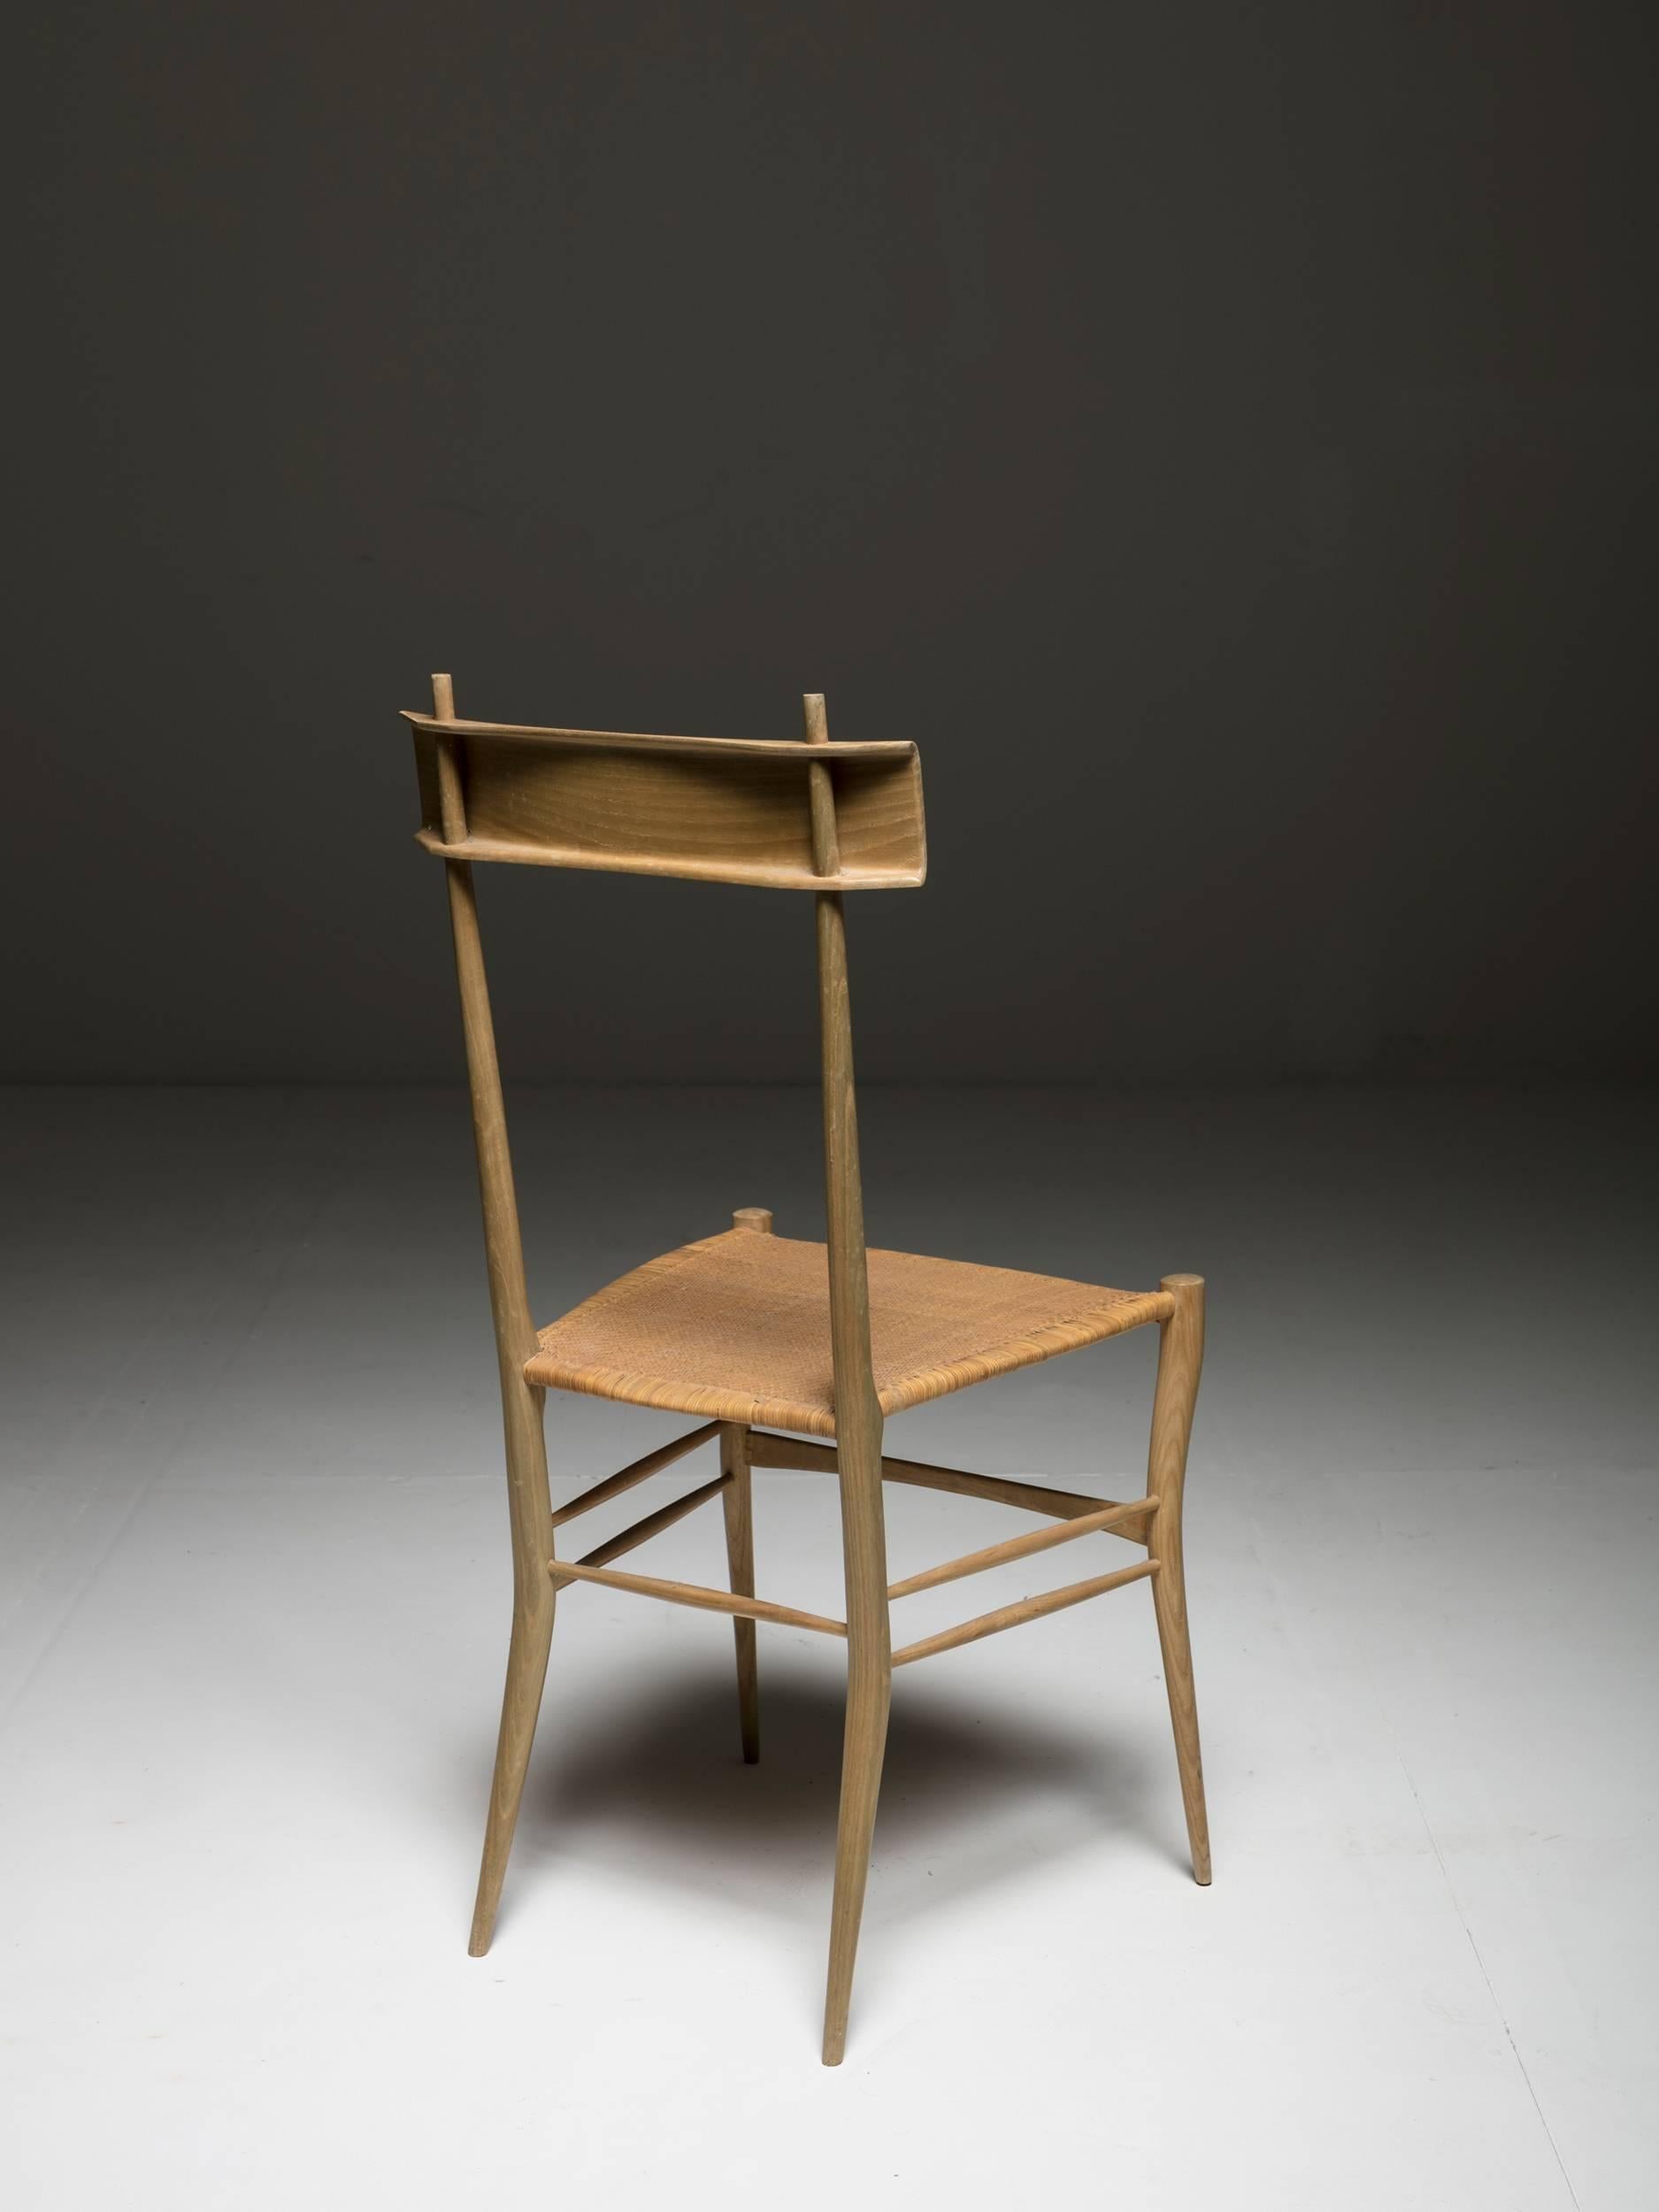 Remarkable Chiavari side chair.
Sleek wood frame and plywood backrest.